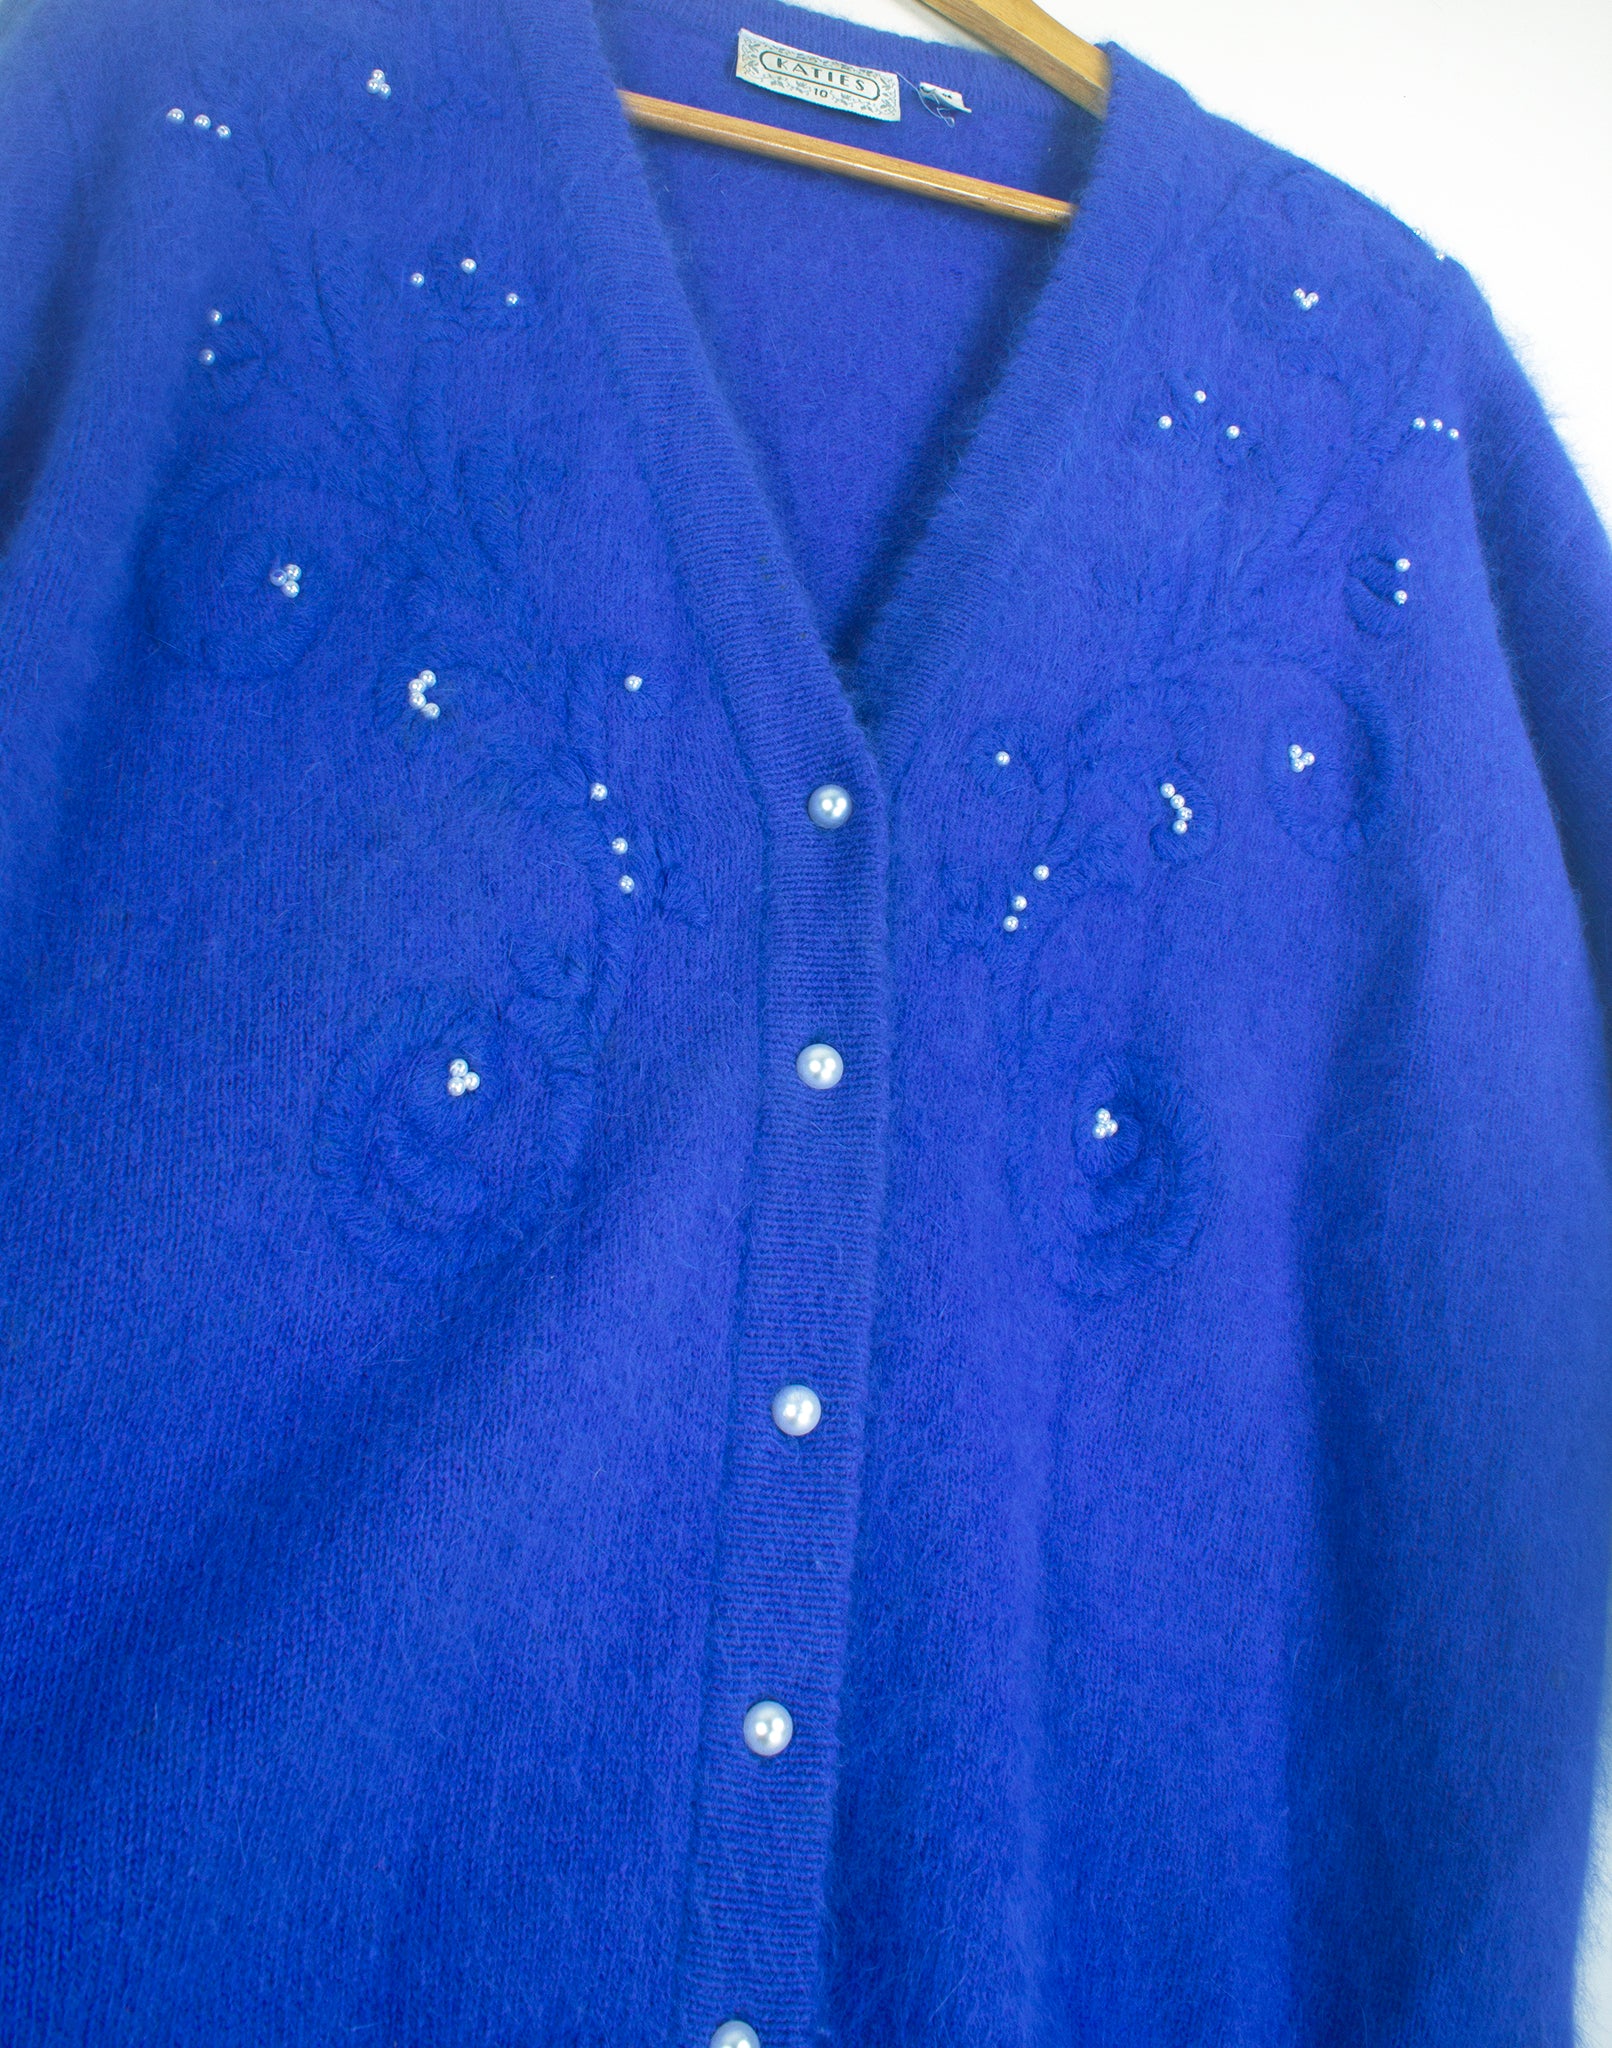 Vintage 80's Katies Blue Angora Cardigan - Size S/M